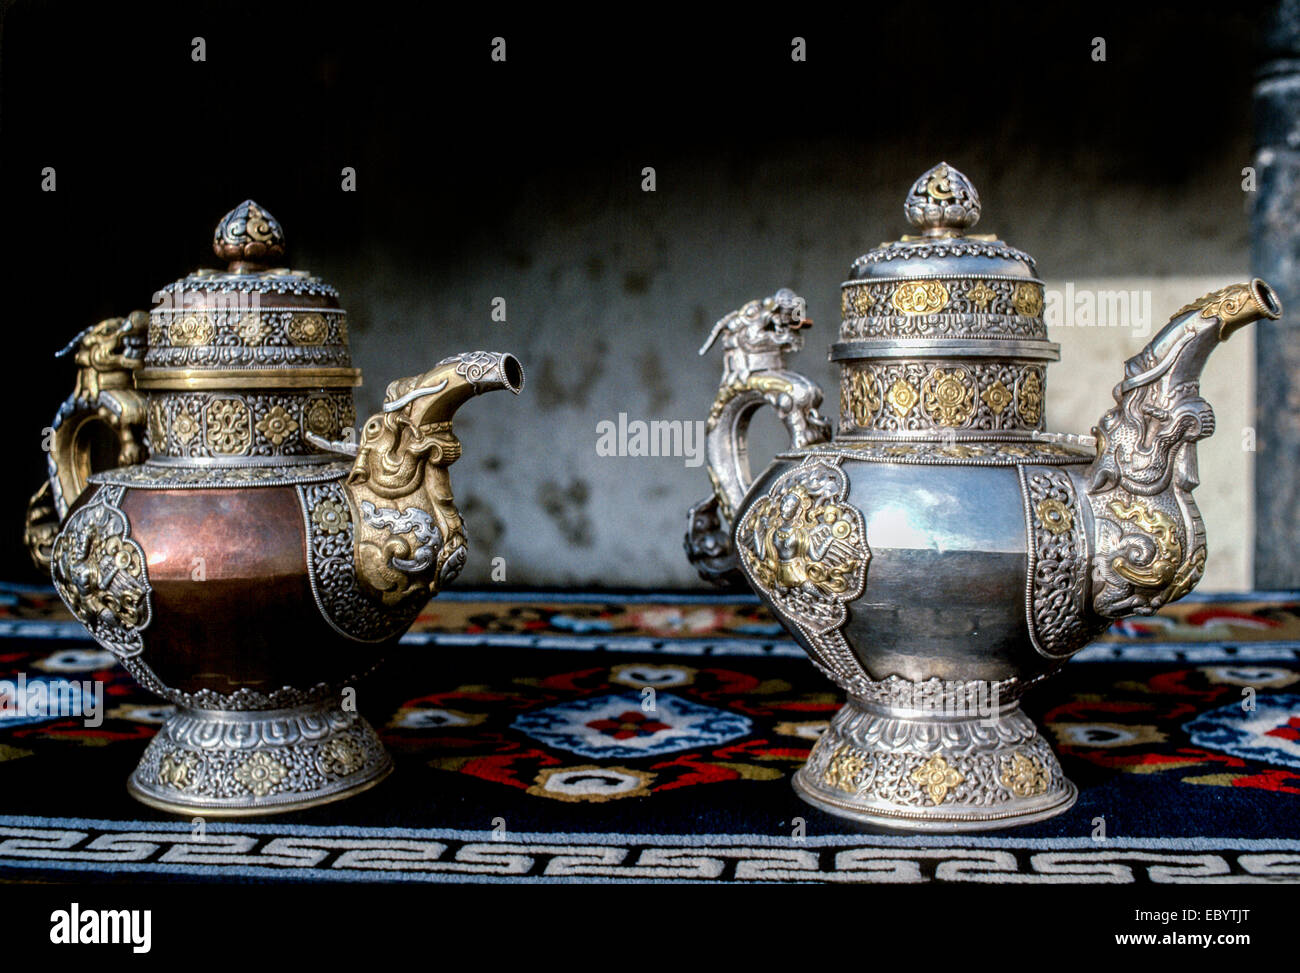 ladakh 2 ceremonial tea pots brass copper gold silver intricate dragons decorative beaten brass rug Stock Photo